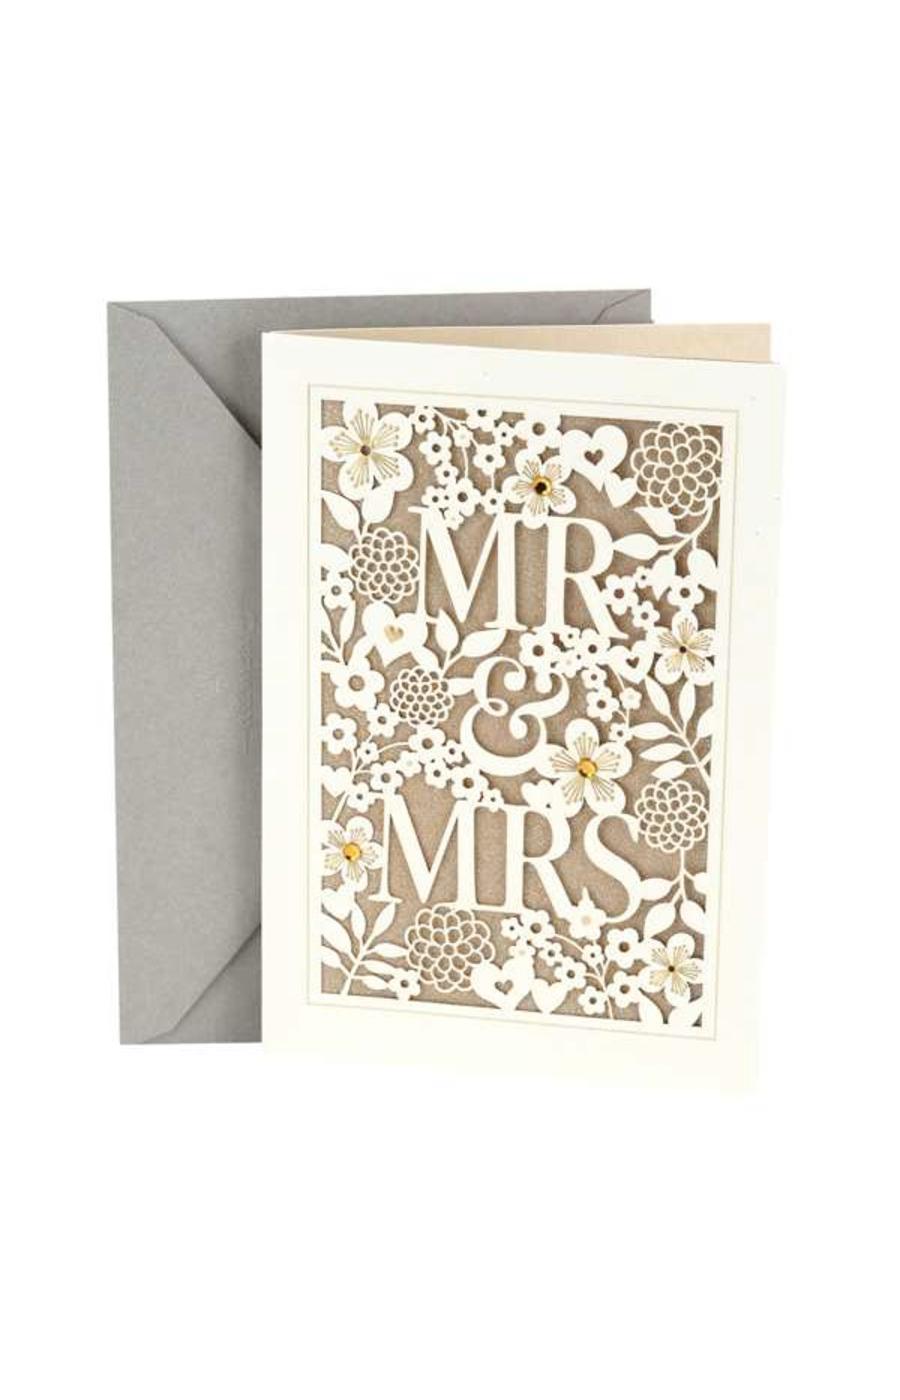 Hallmark Mr. & Mrs. Wedding Card - E30, E24; image 1 of 5